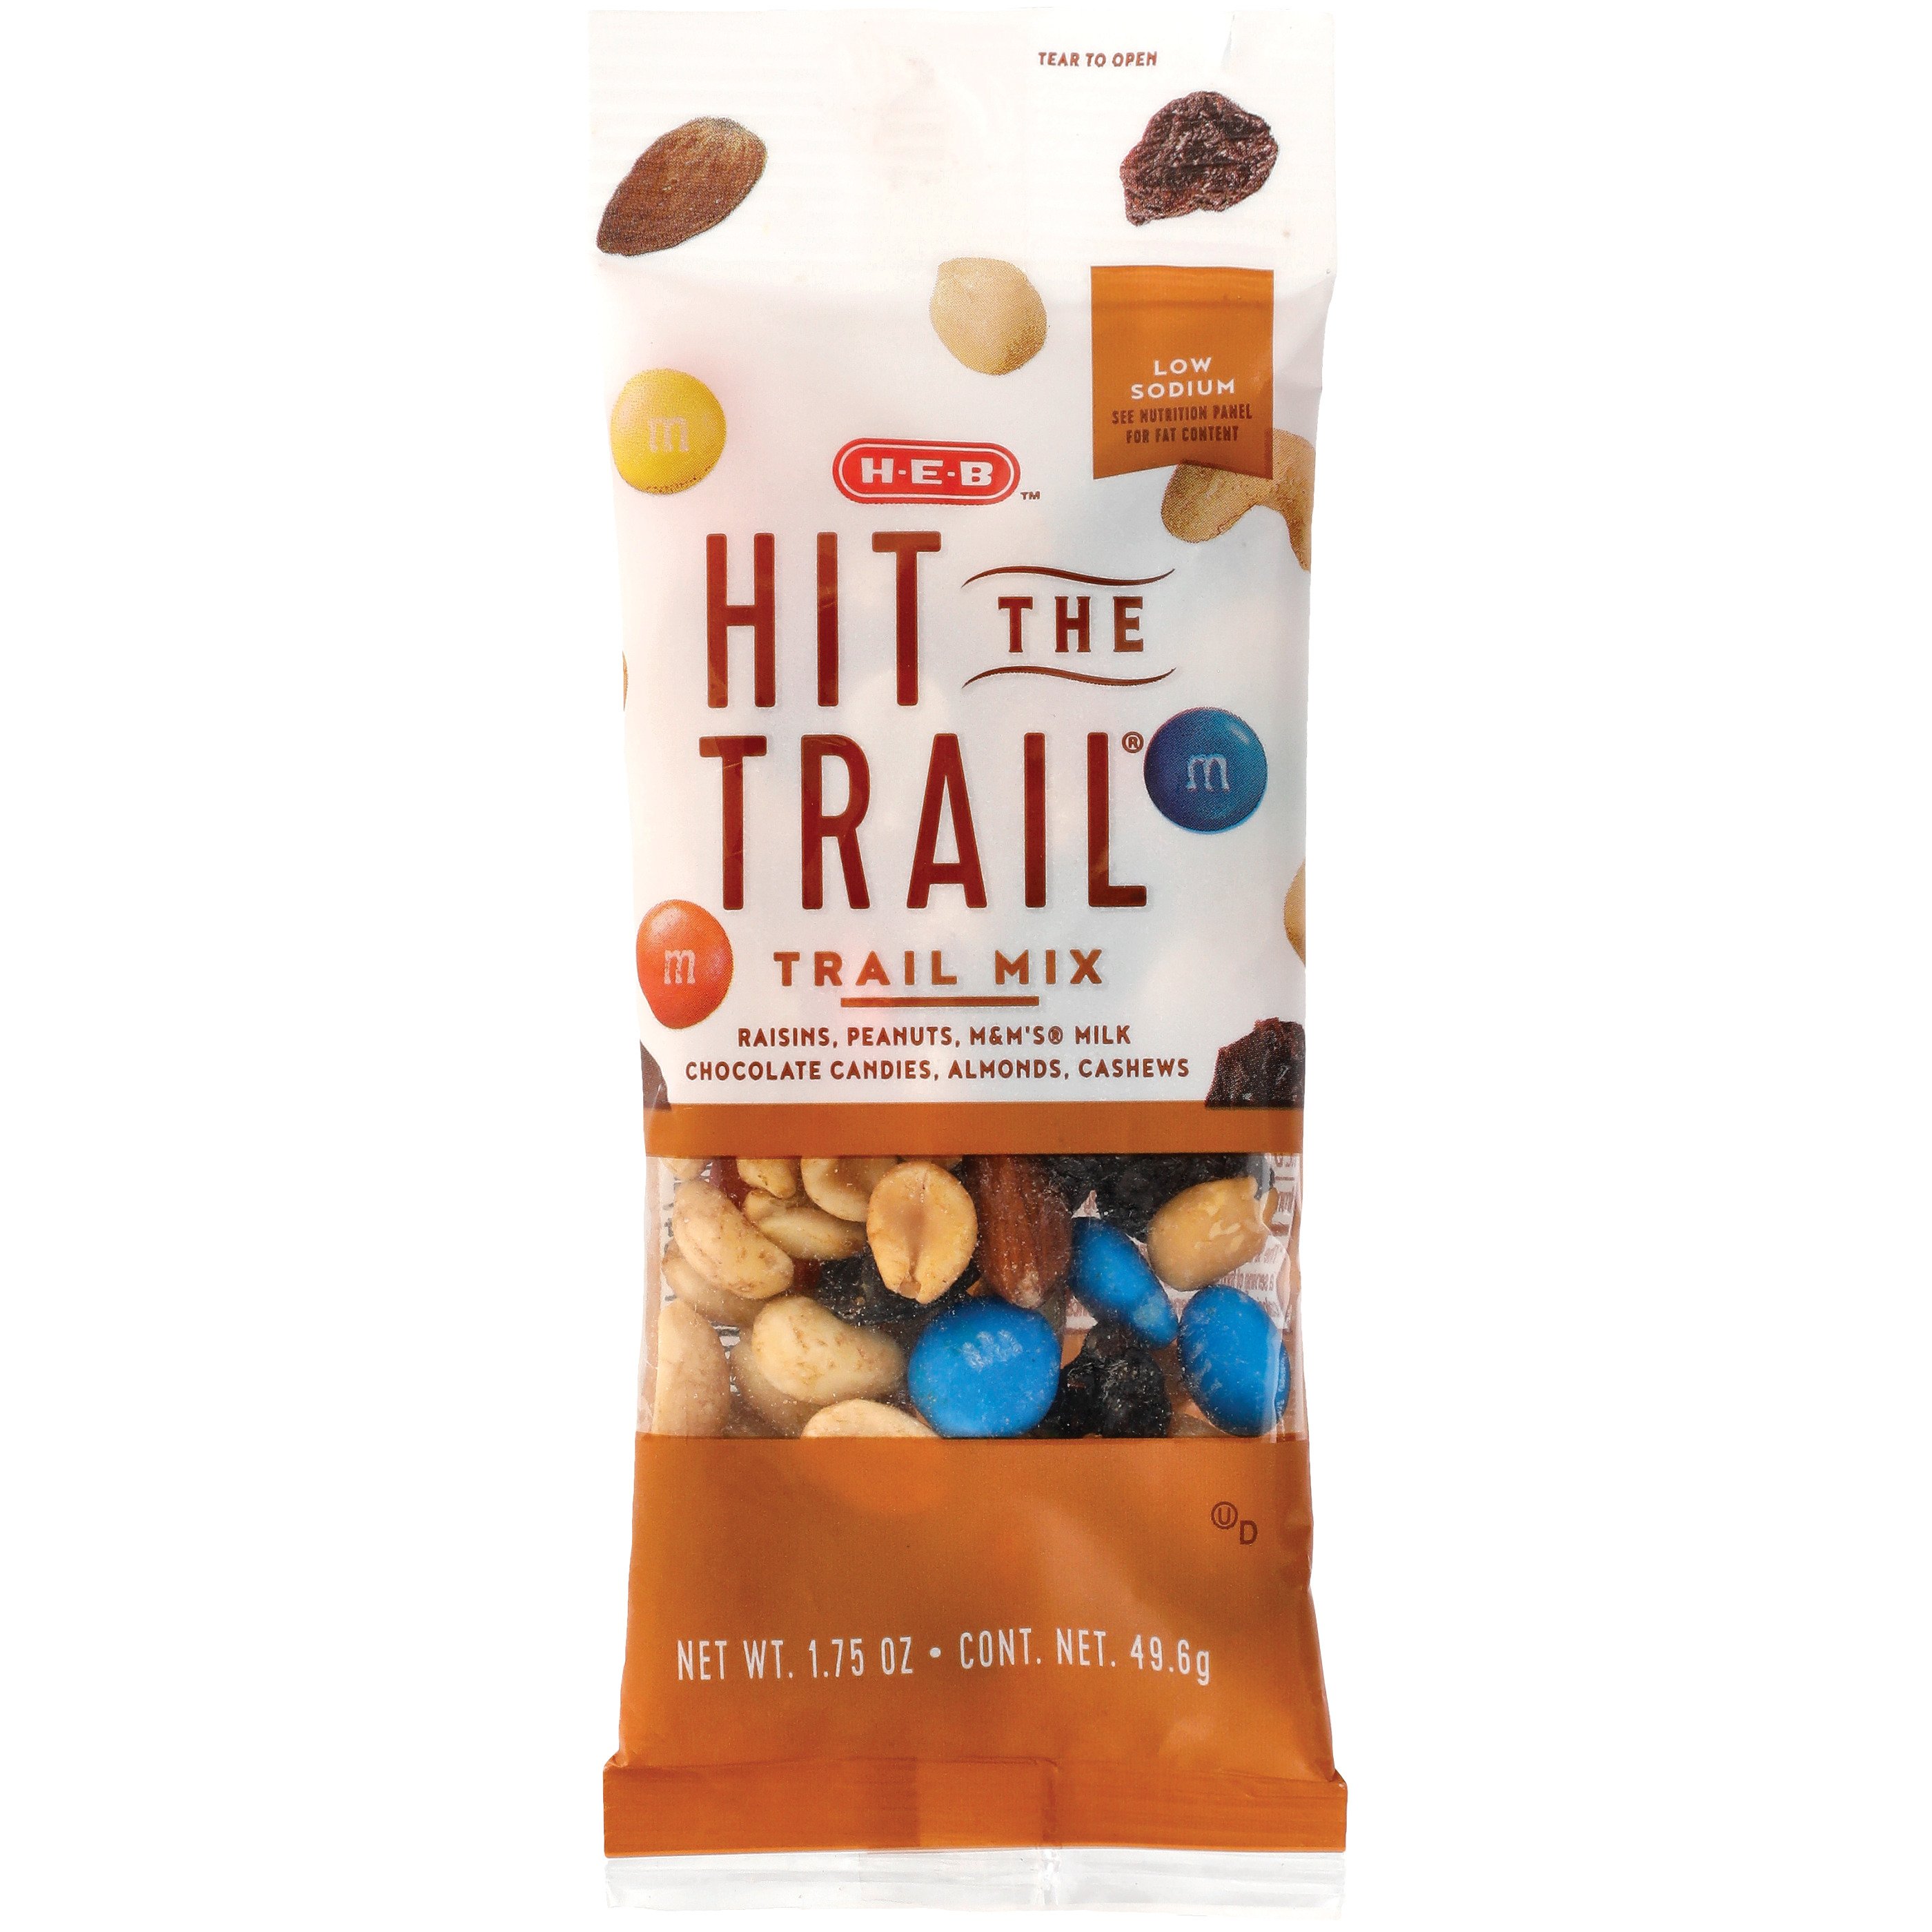 H-E-B Hit the Trail Mix - Peanut M&M'S